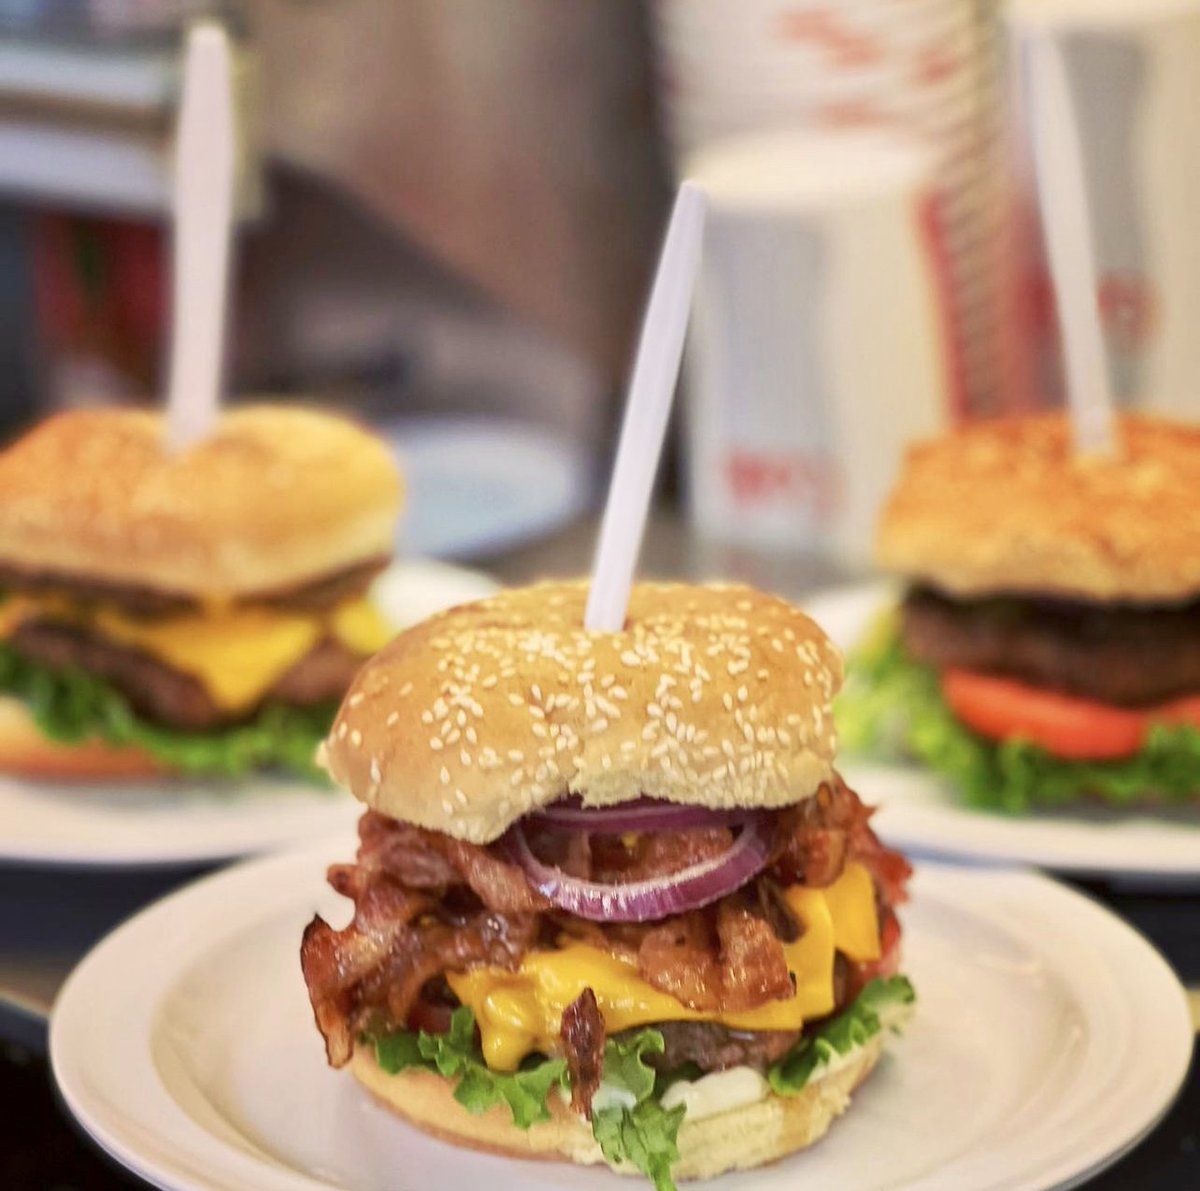 Whether you like your burger plain or loaded up, we’ve got you covered!🍔
#yeolefashioned #chseats #holycityeats #chucktowneats #eaterchs #bitesofchs #chstoday #charleston #familyowned #hotdogs #BLTs #sandwiches #icecream #burgers #milkshakes #sundaes